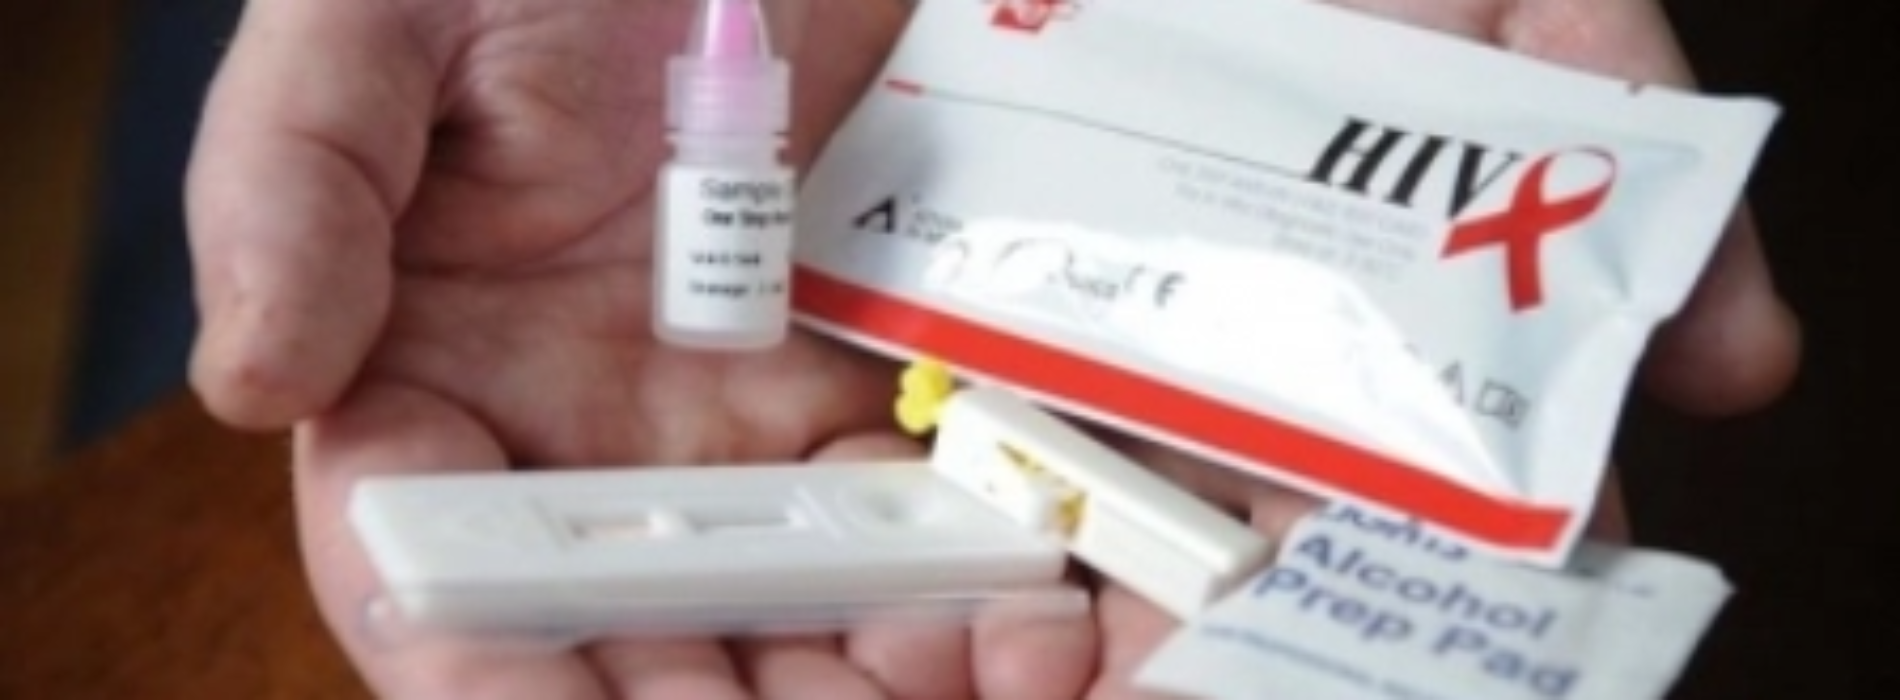 Kenya launches HIV home test kit